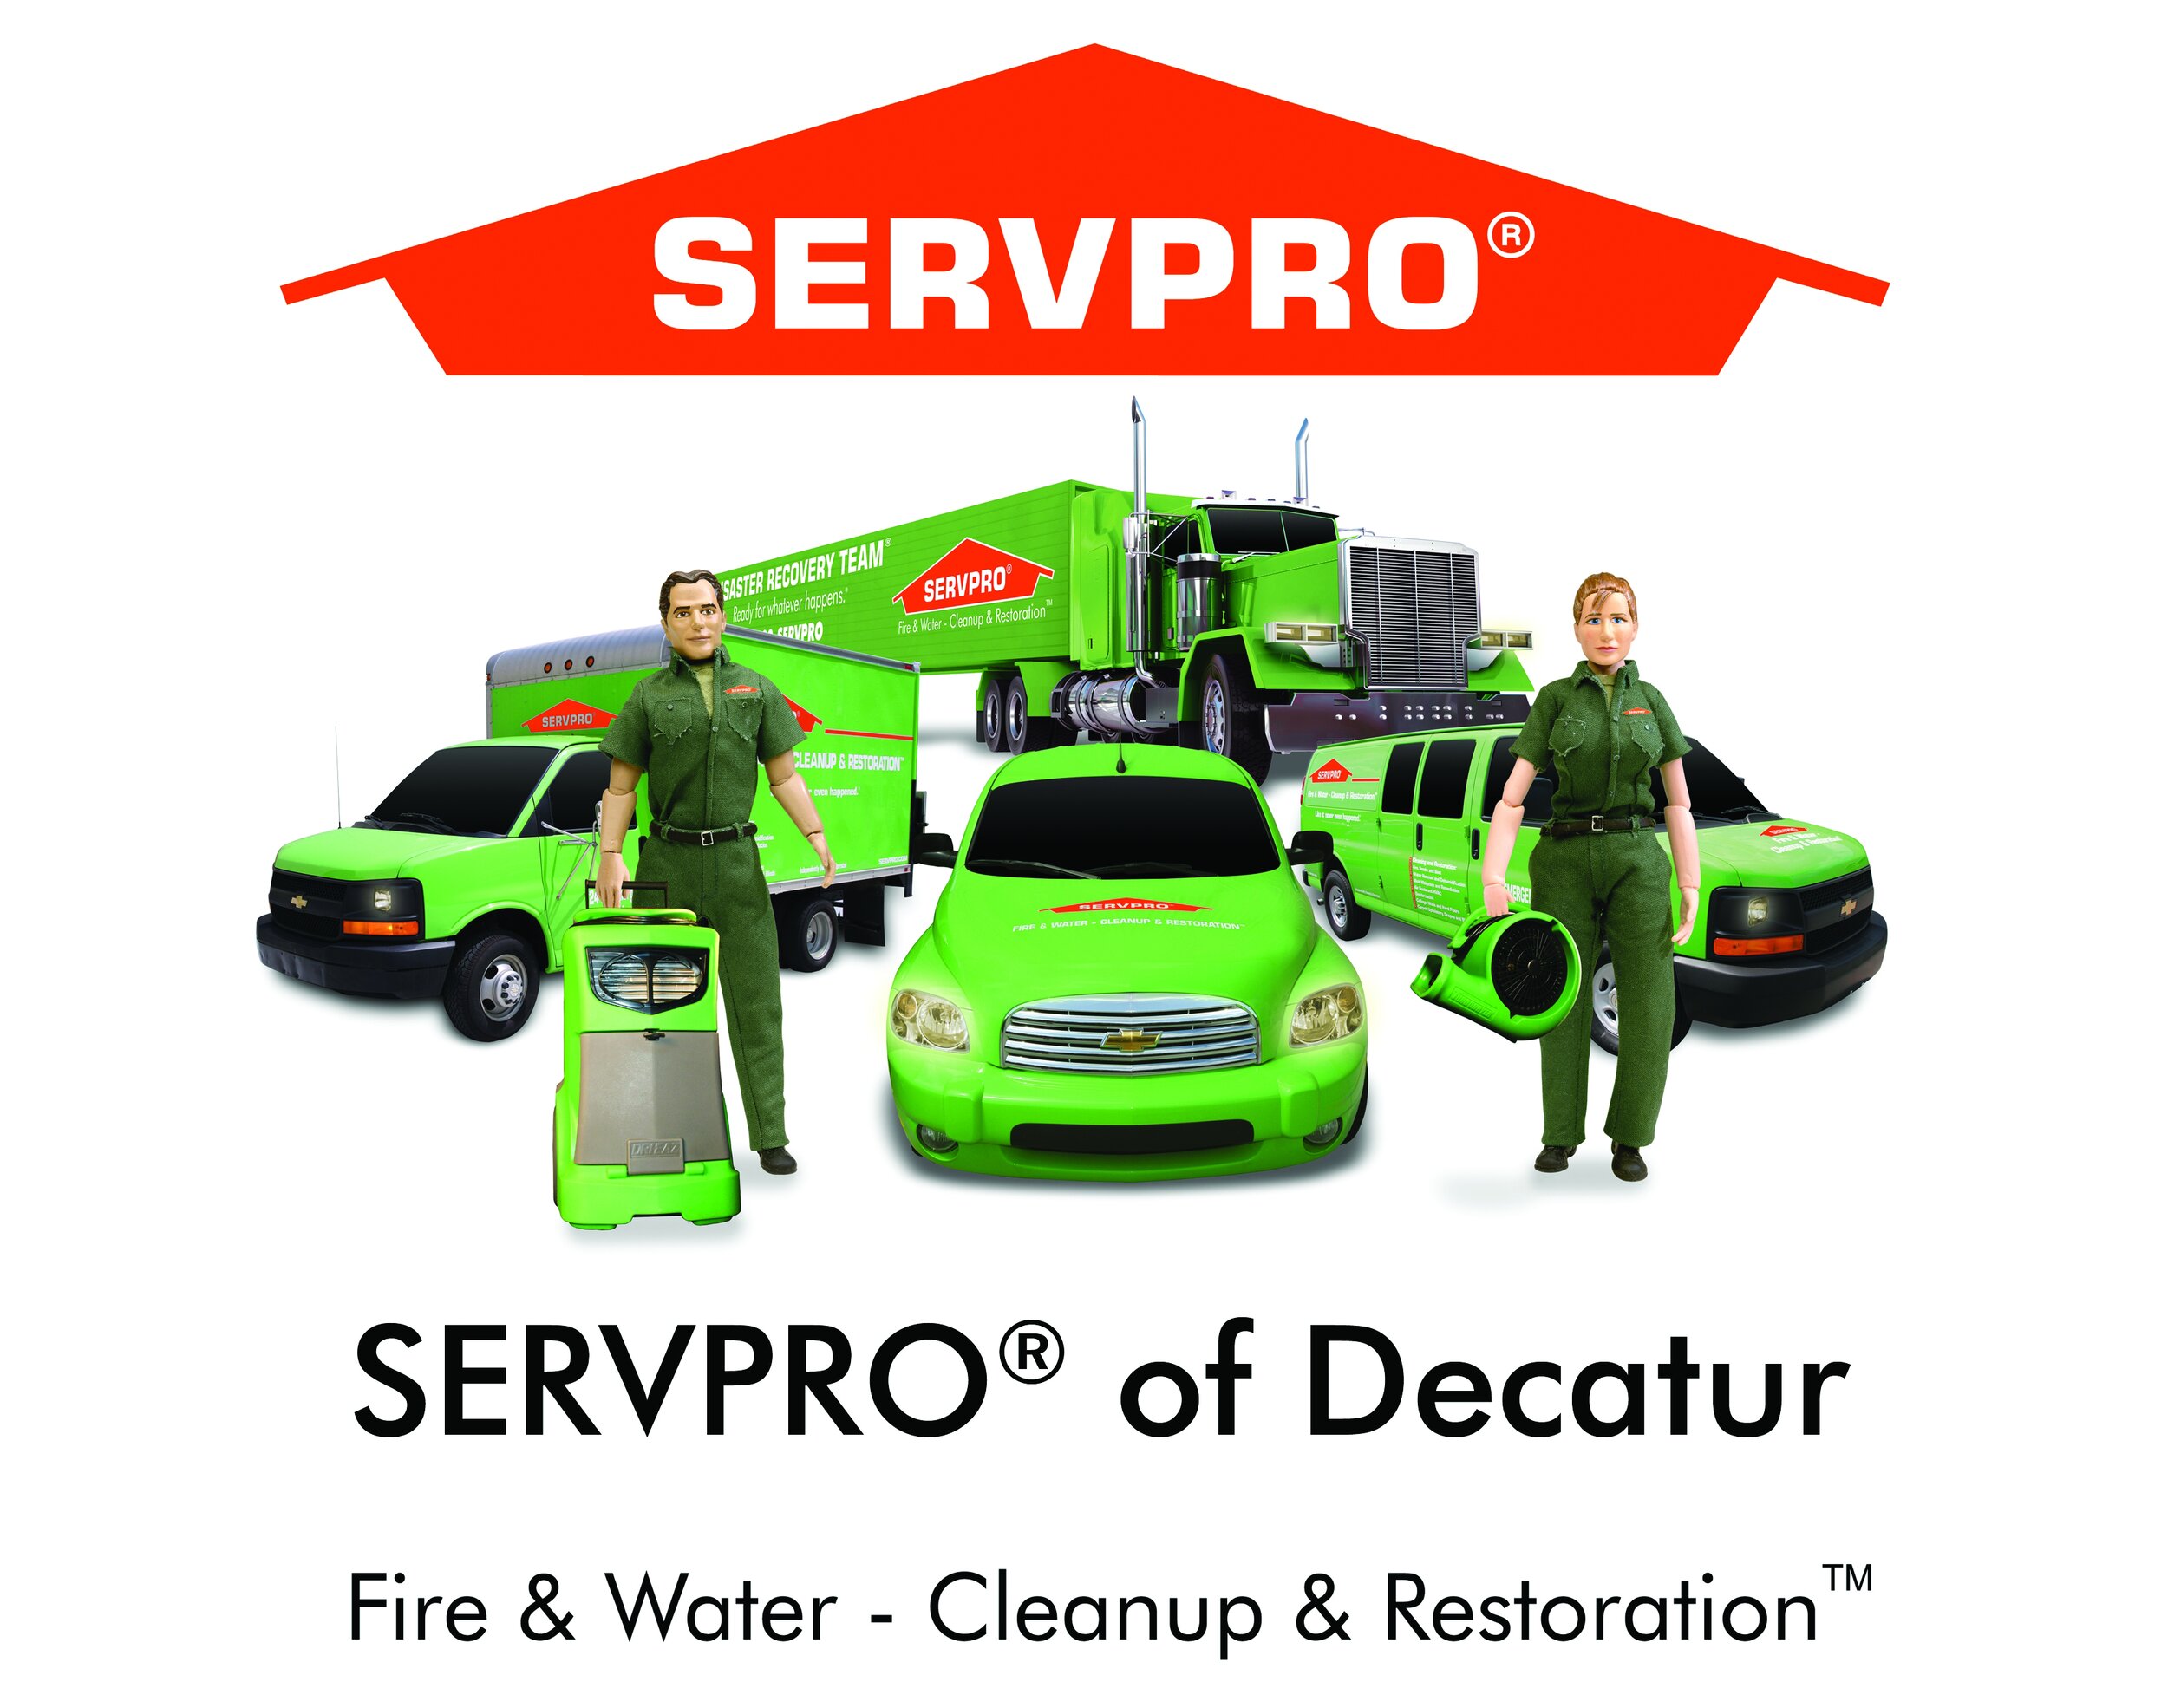 SERVPRO - New logo - 2019.jpg